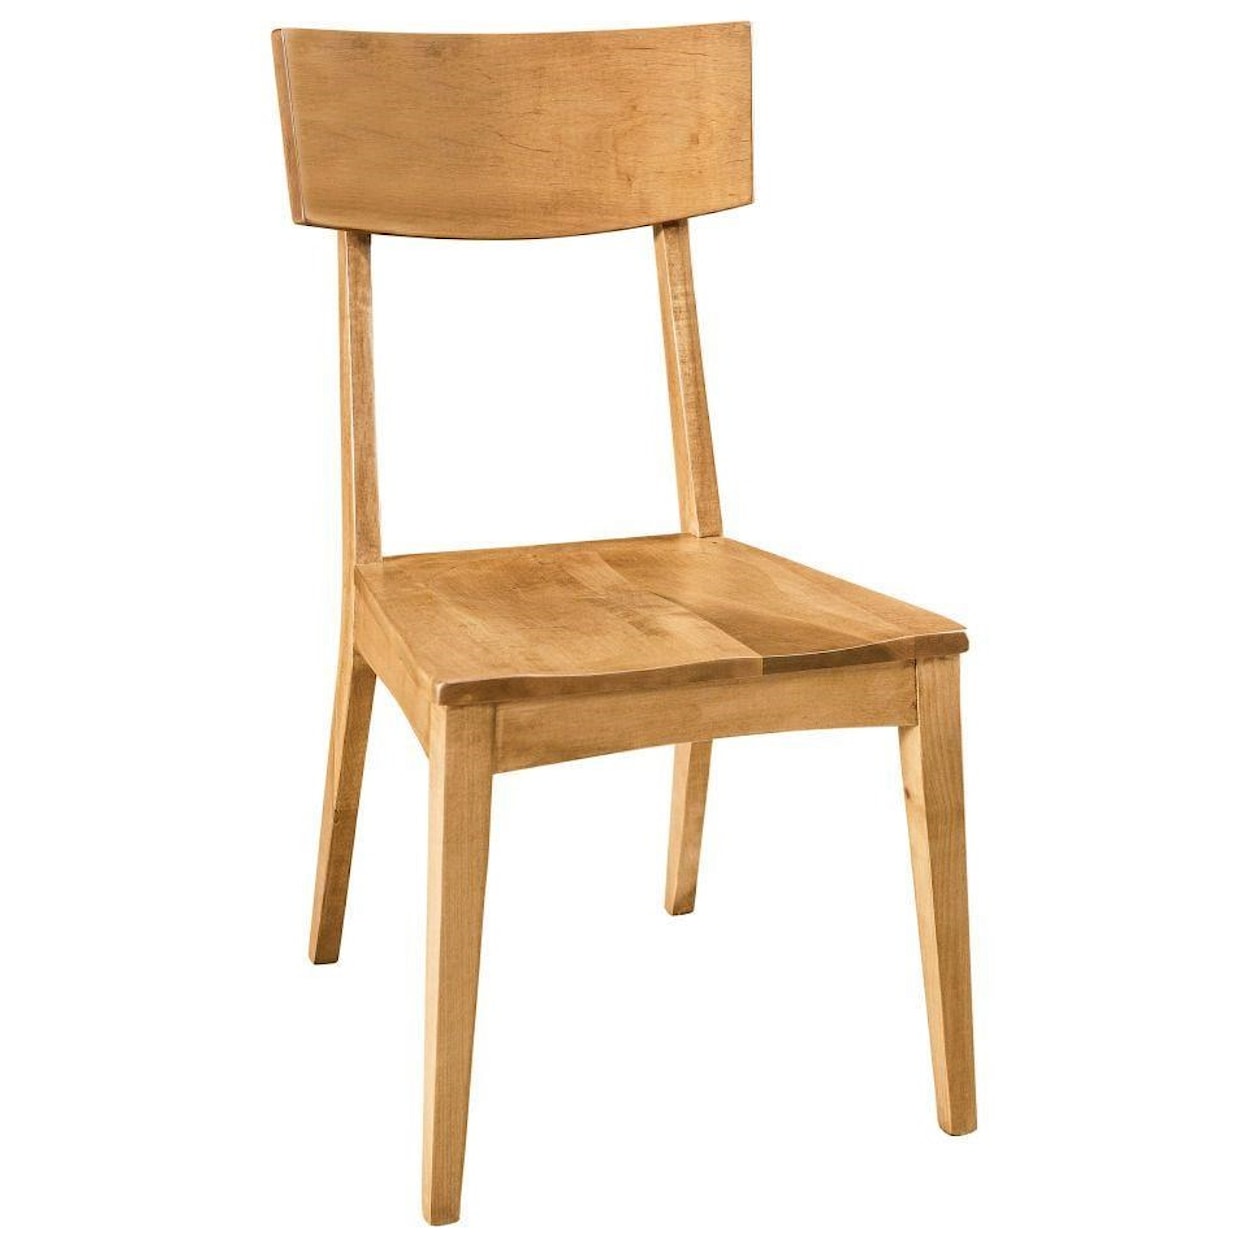 F&N Woodworking Barlow Side Chair